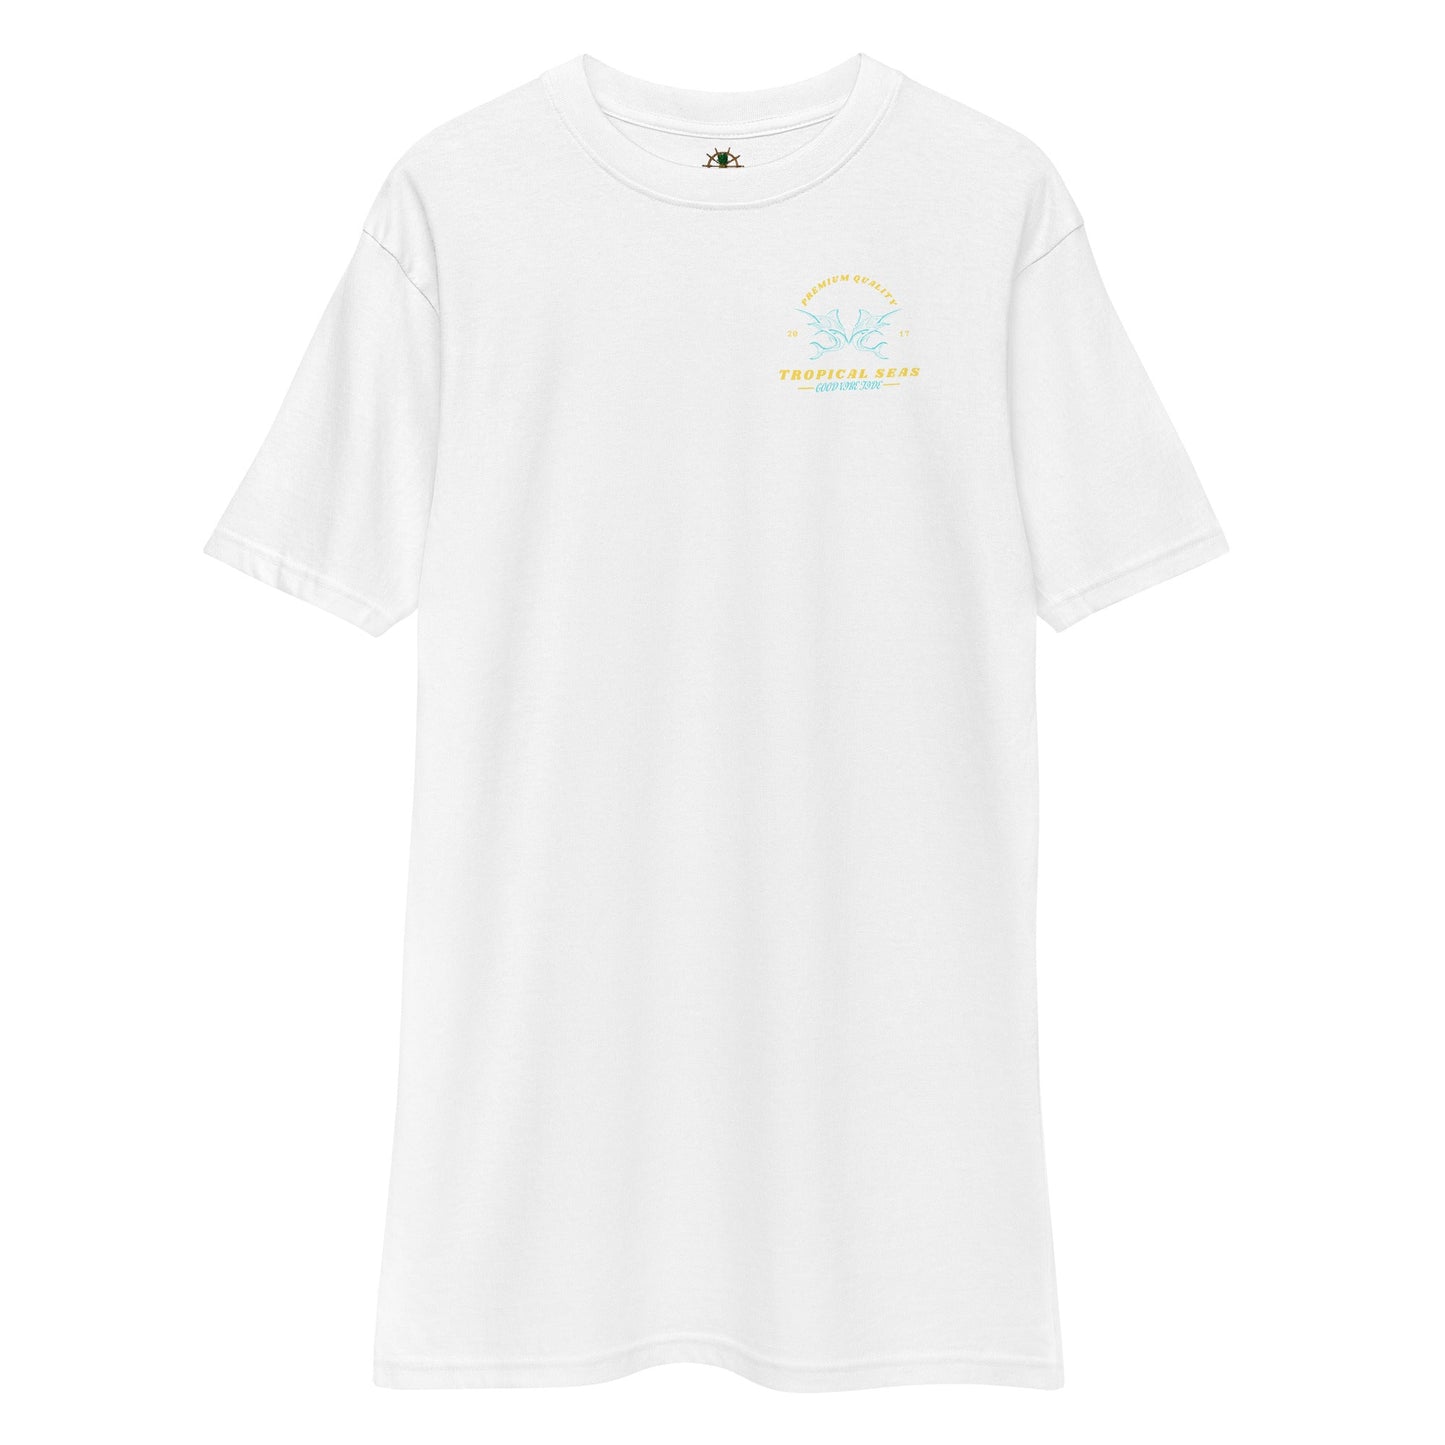 Men's Premium Swordfish Dual T-shirt - Tropical Seas Clothing 